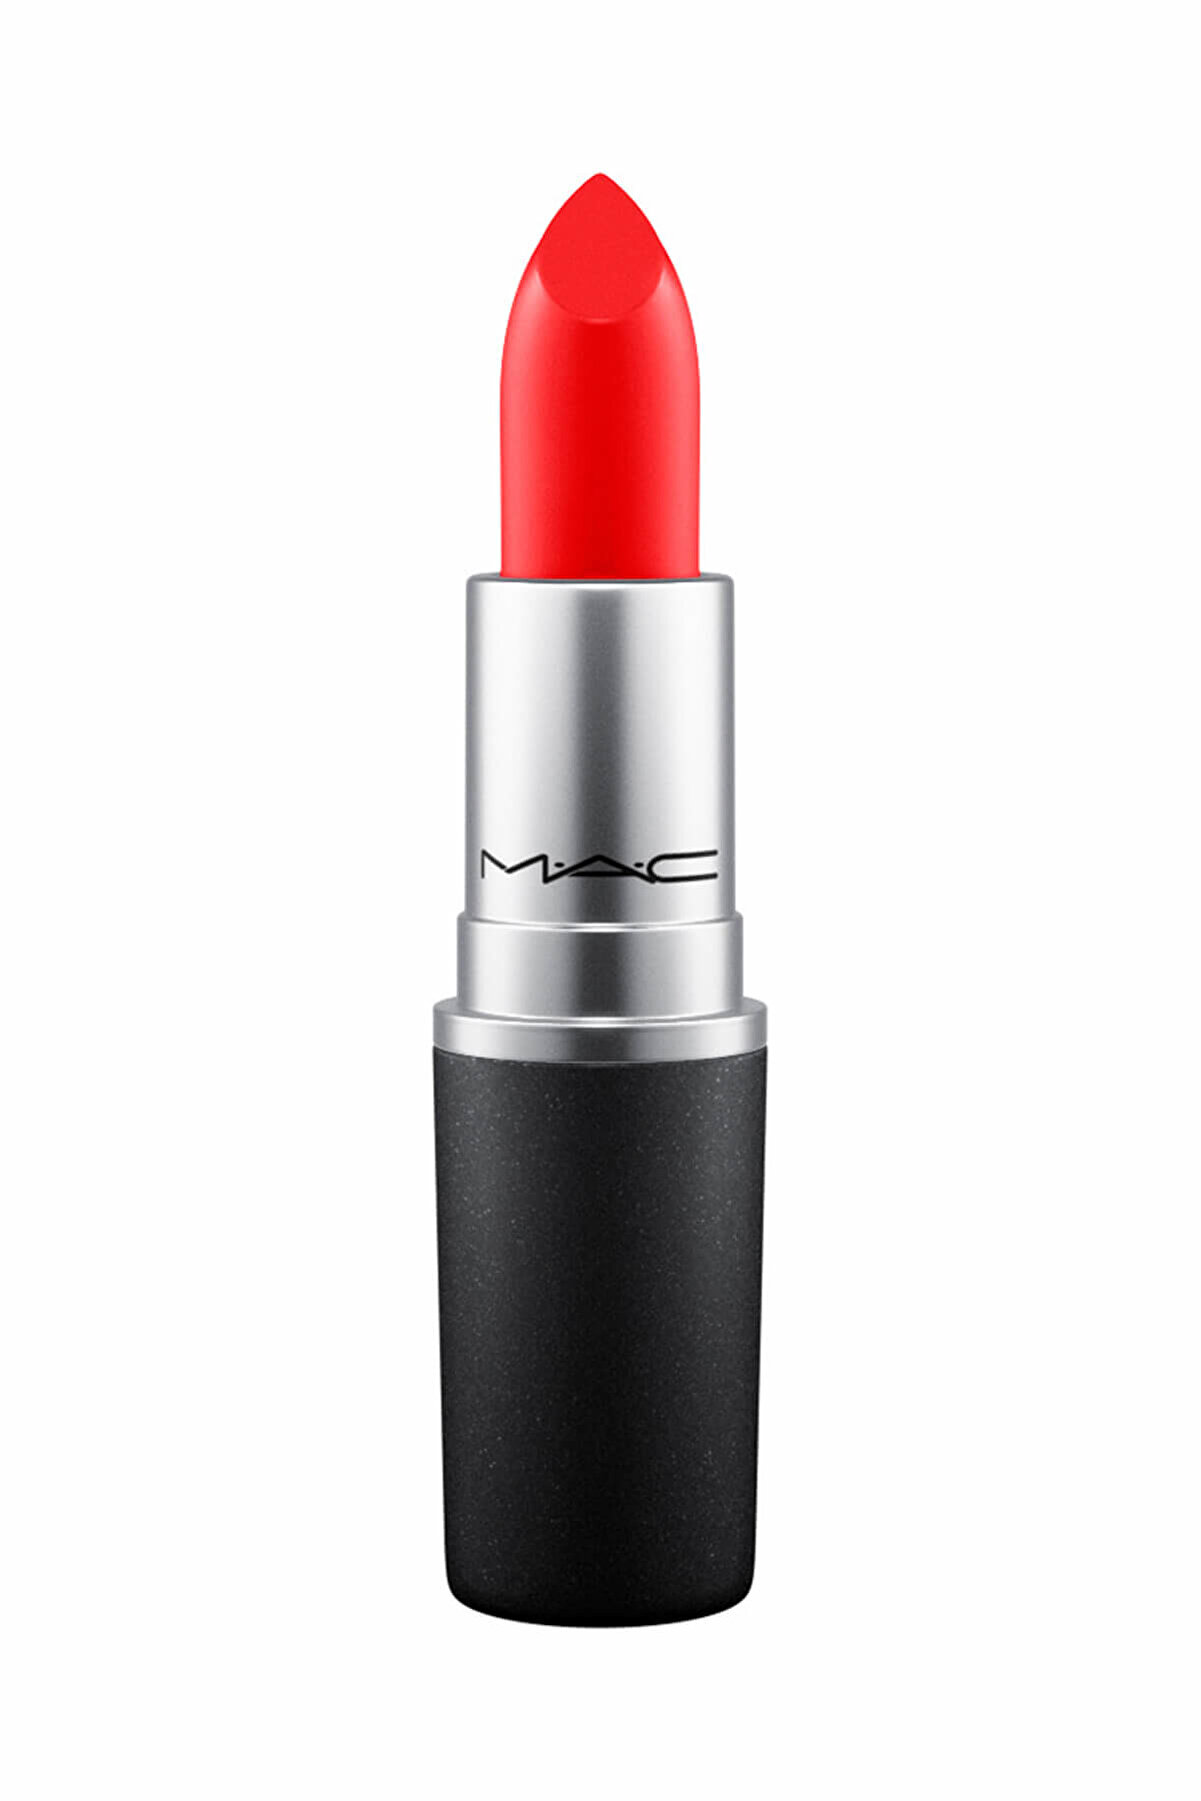 Mac Ruj - Lipstick Mangrove 3 g 773602356003